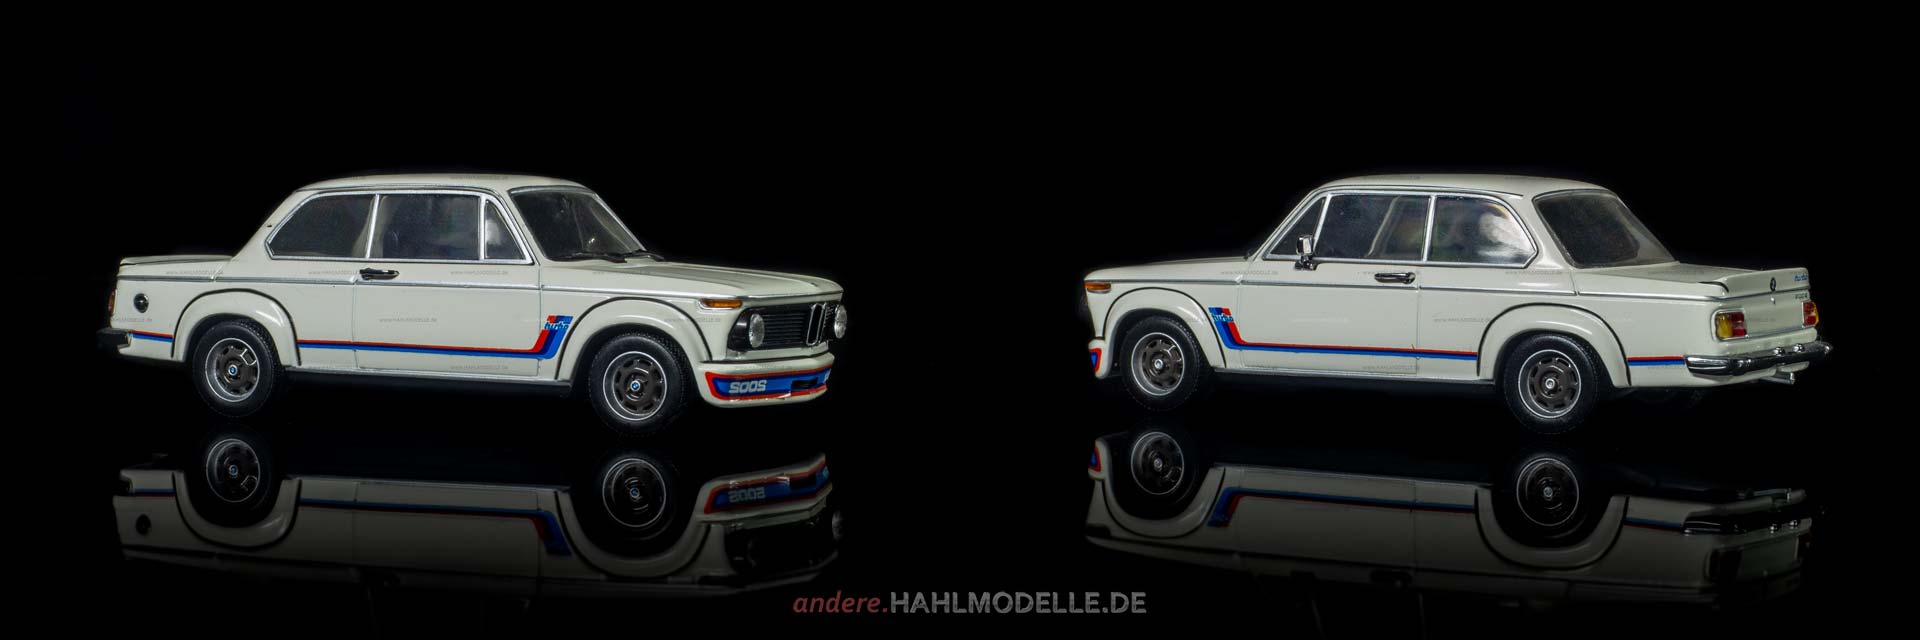 BMW 2002 turbo (E20) | Limousine | Minichamps | www.andere.hahlmodelle.de